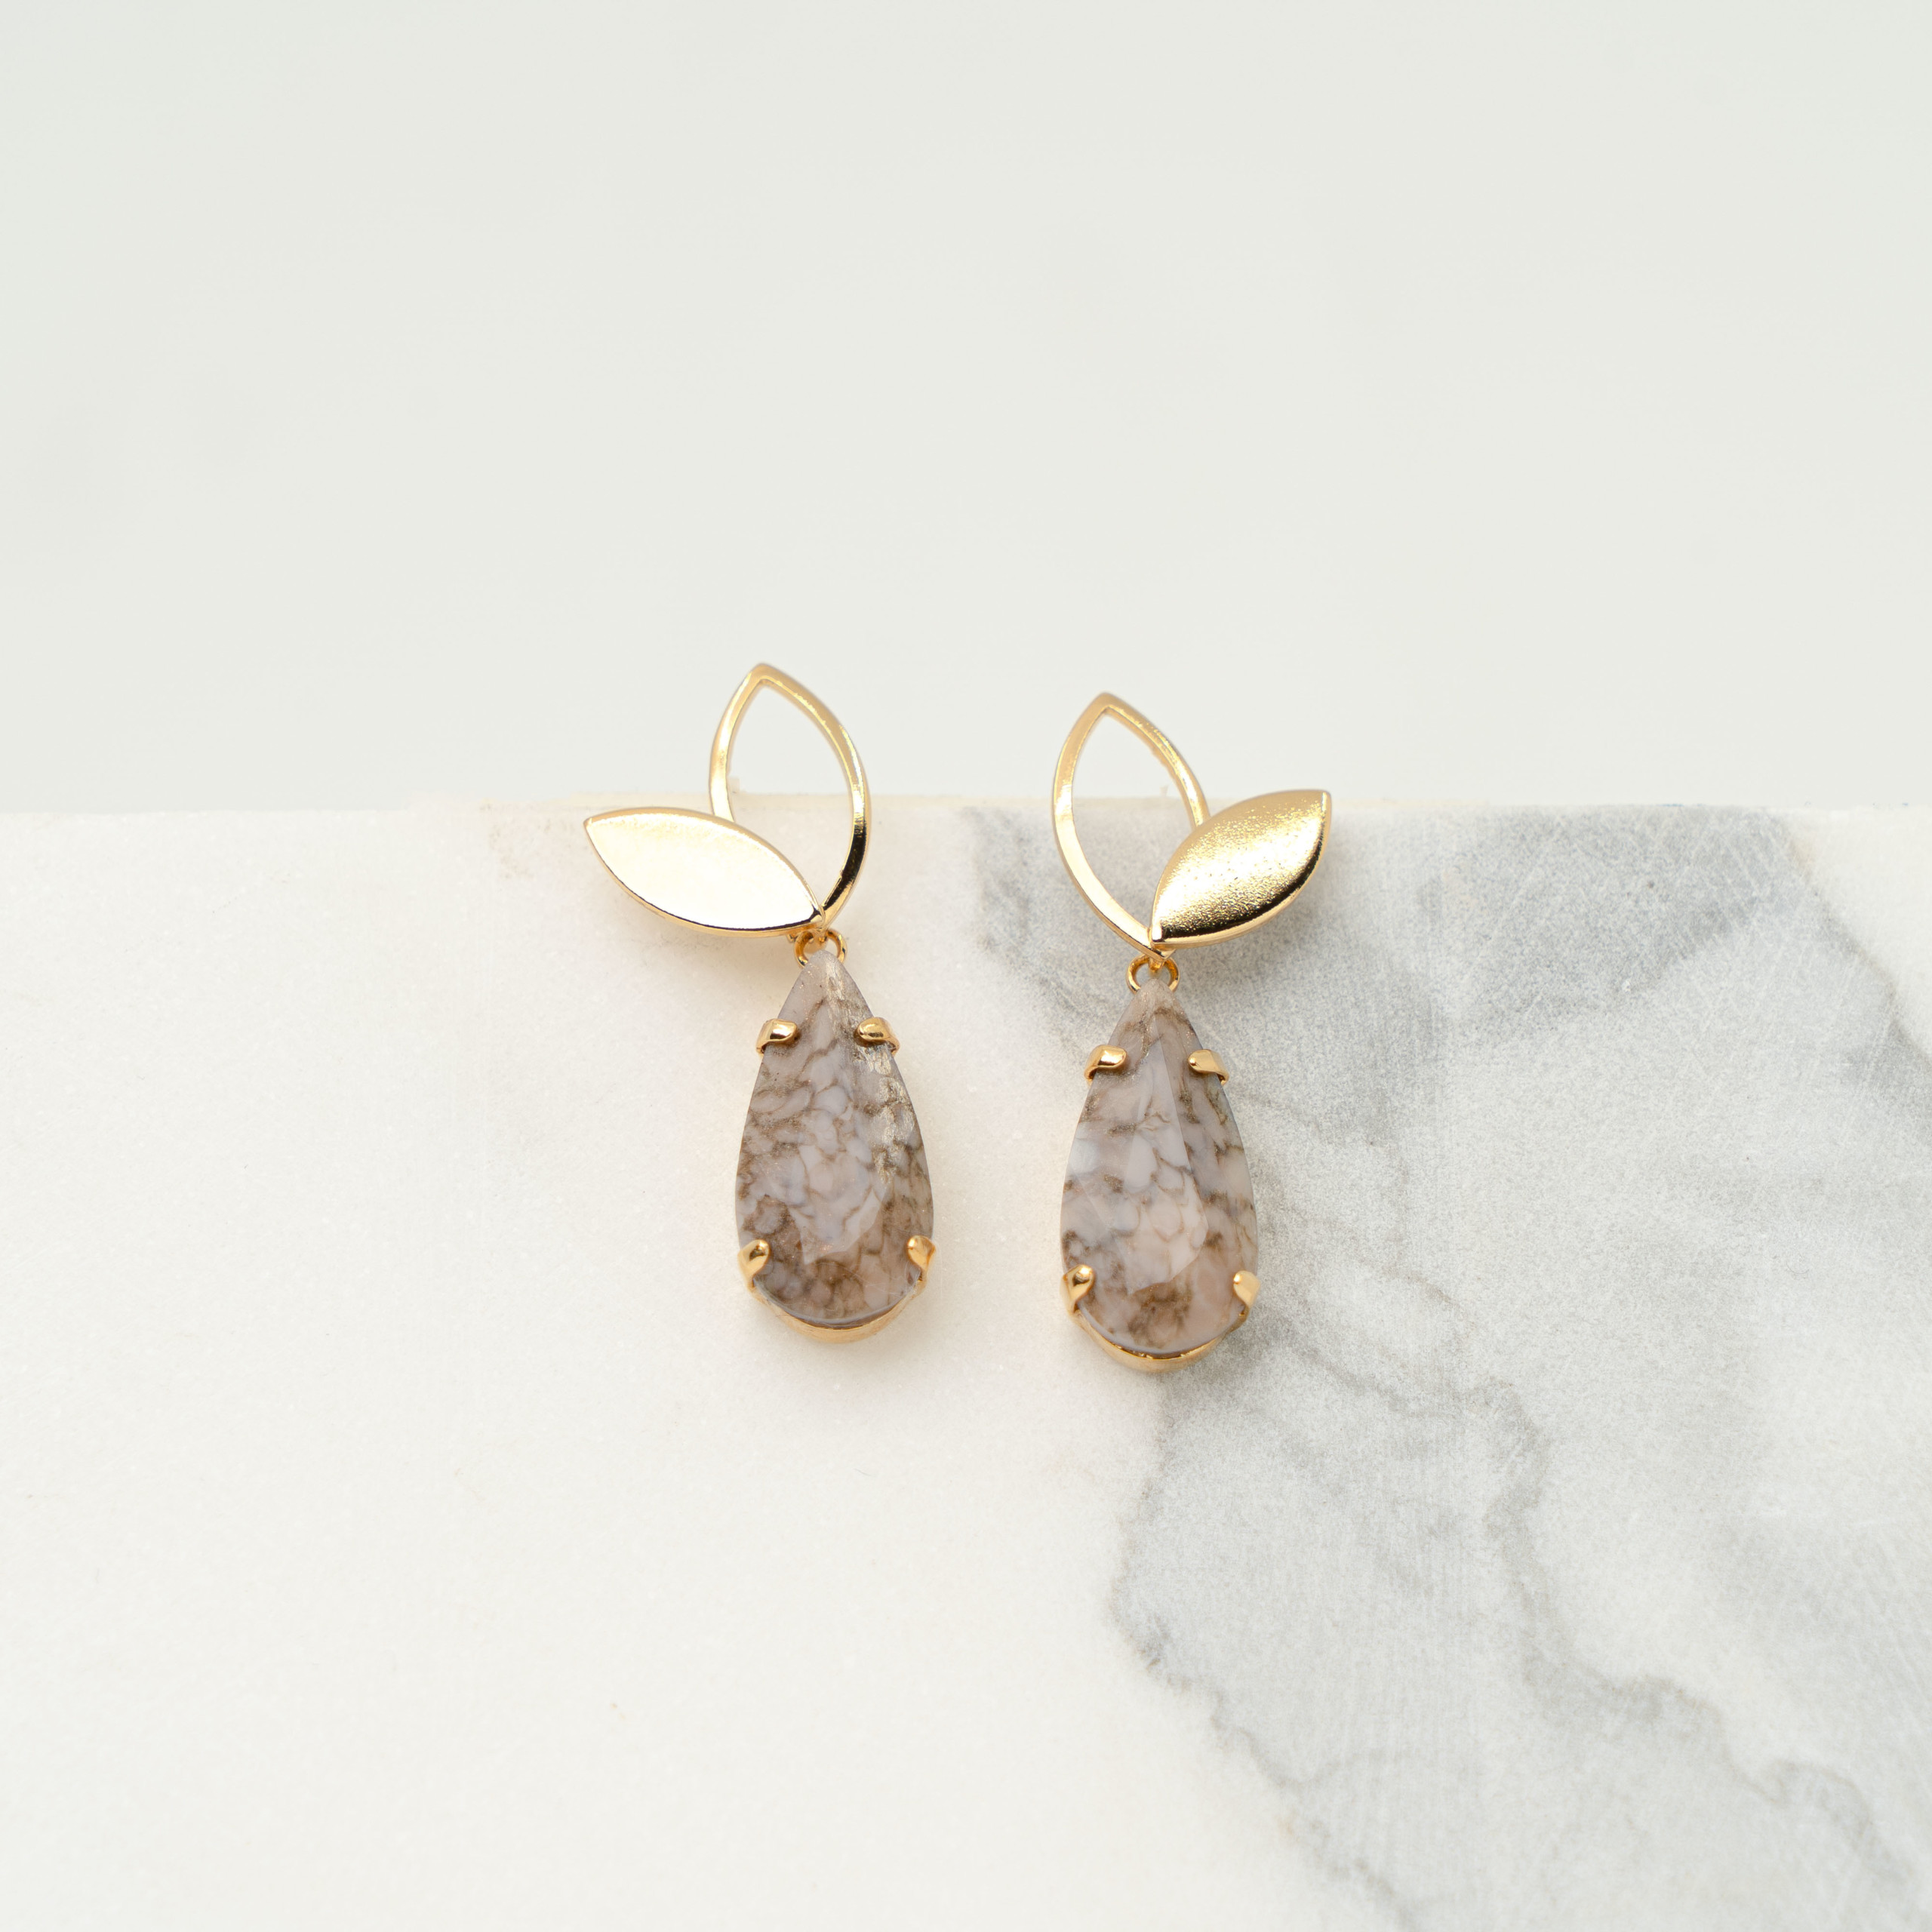 Iris nude marmer gold earrings